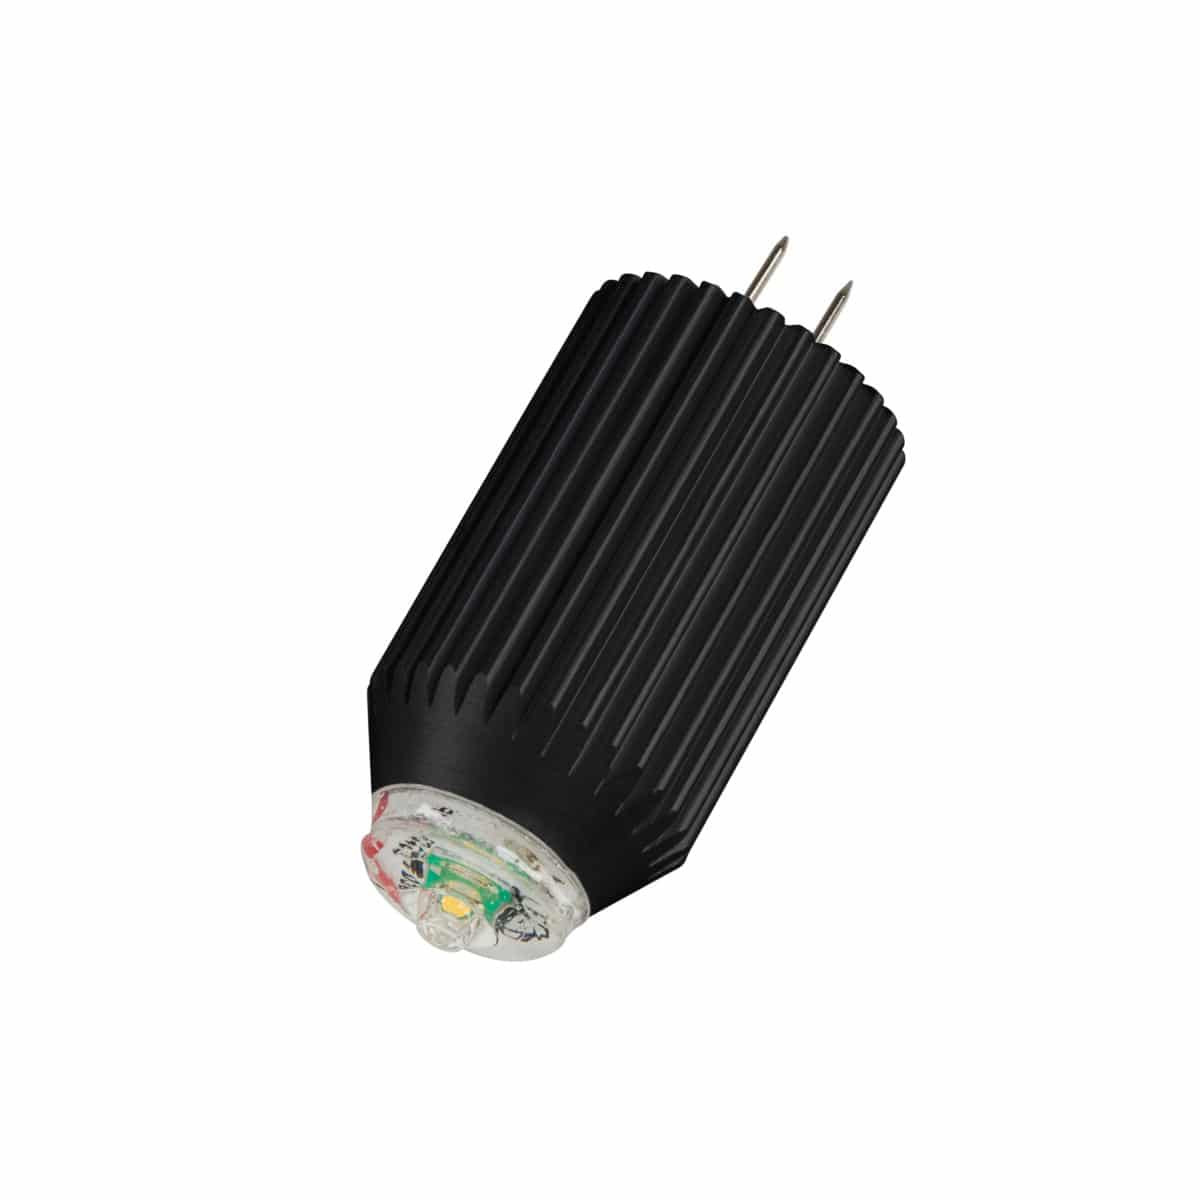 Landscape Lighting Replacement Bulbs
 Kichler G4 T3 Bi Pin LED Lamp